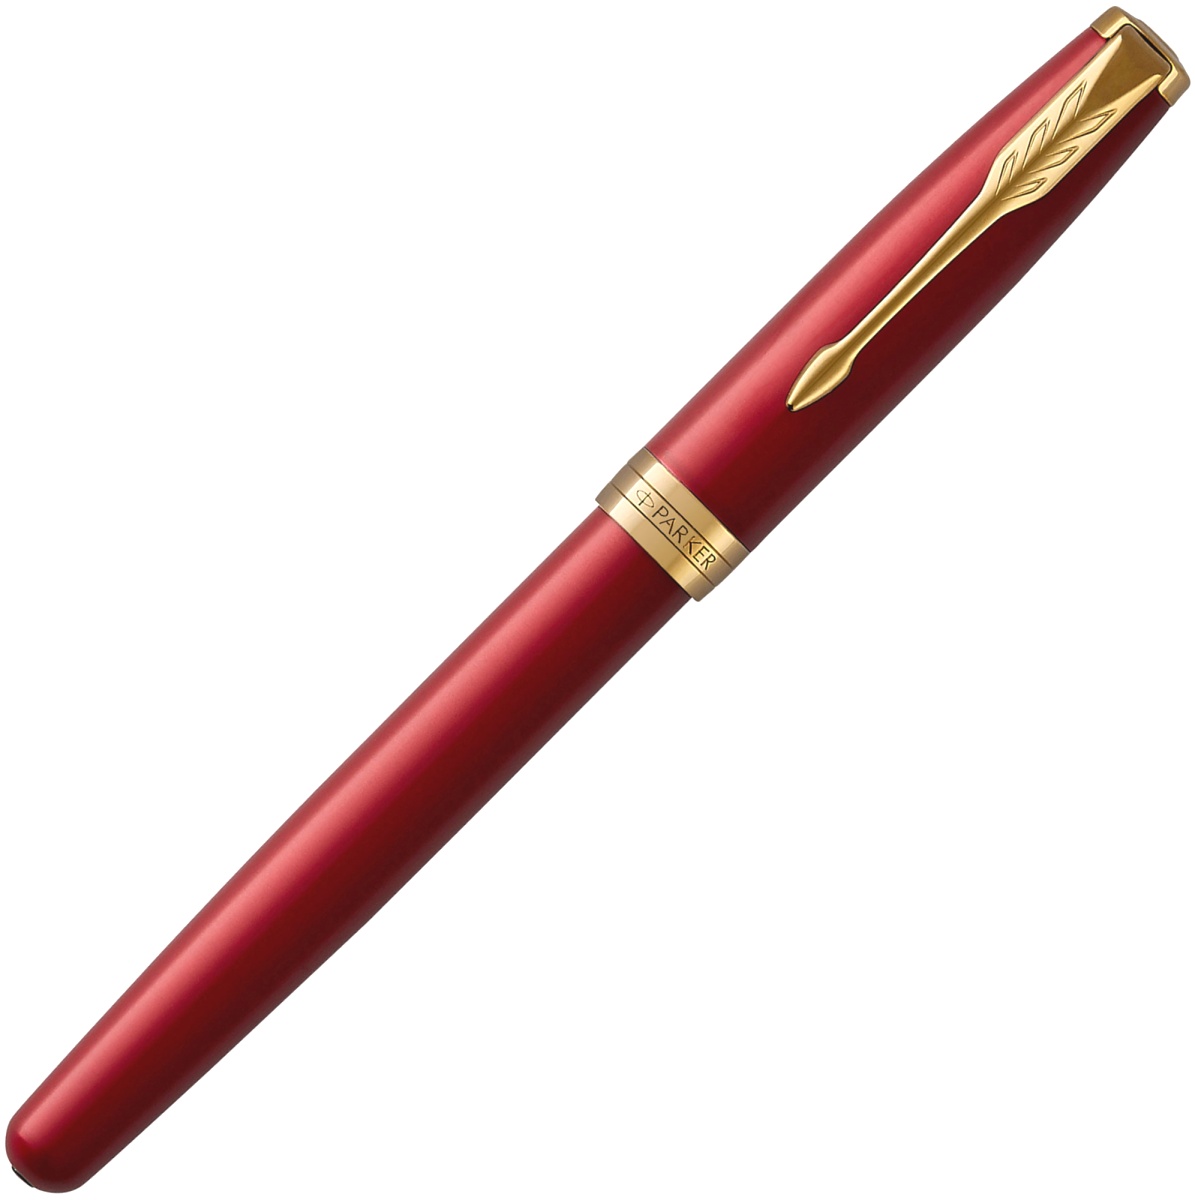  Перьевая ручка Parker Sonnet Core F539, Lacquer Intense Red GT (Перо F), фото 2